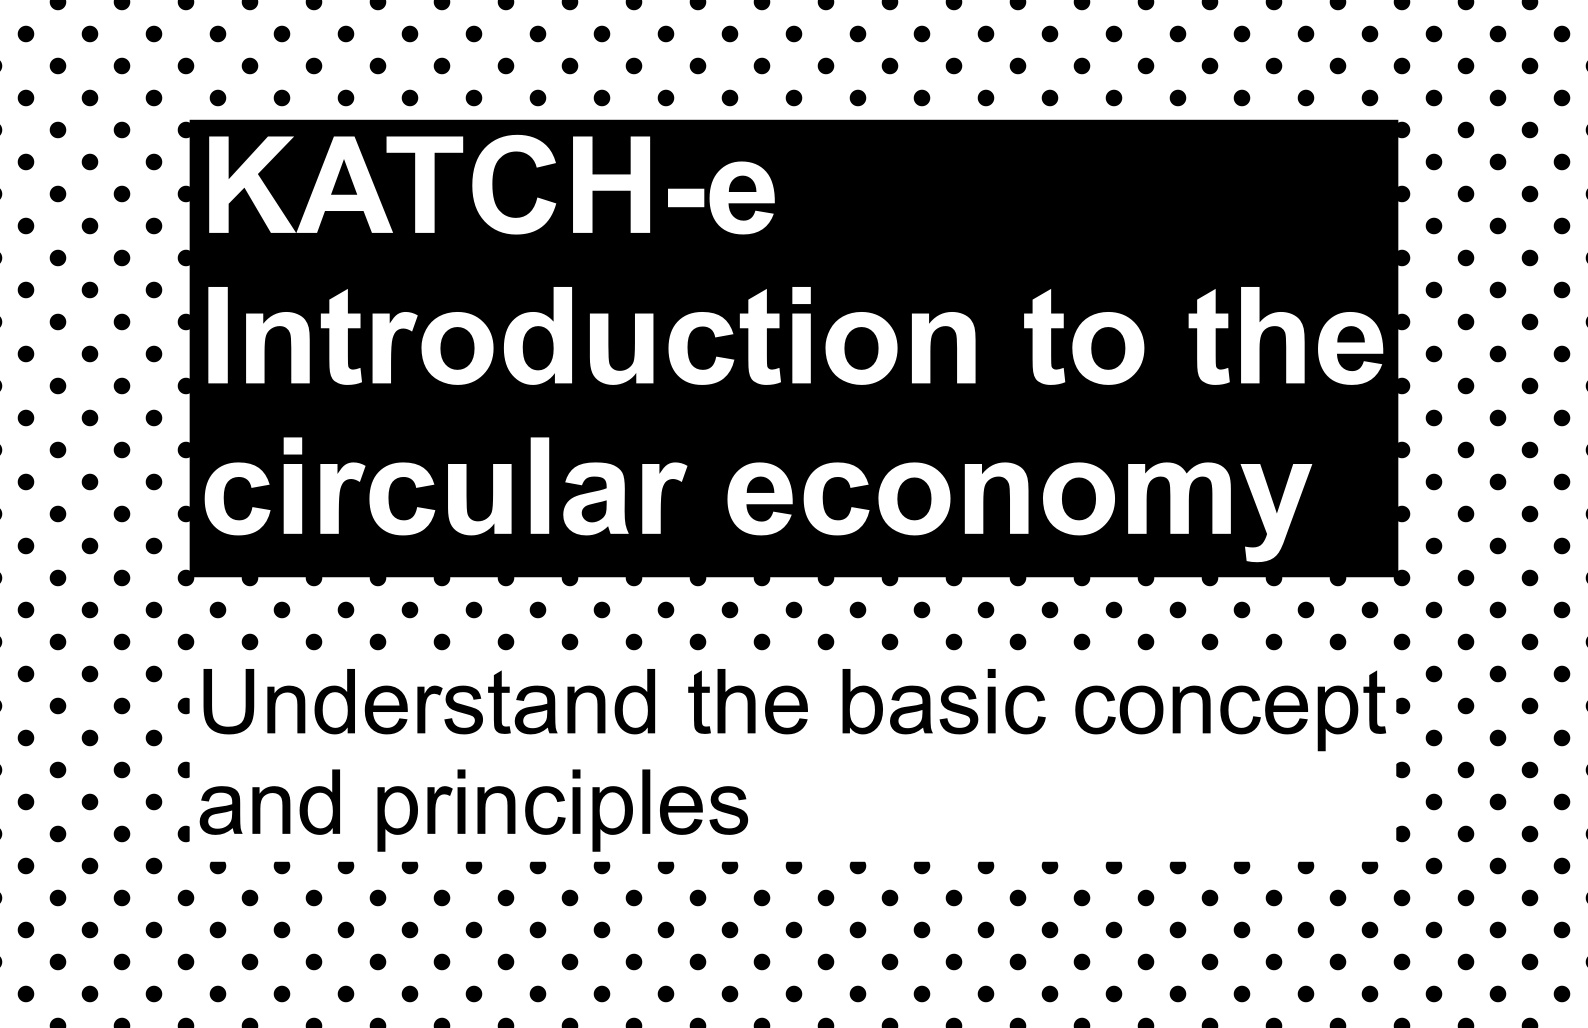 katch-e: Introduction to Circular Economy